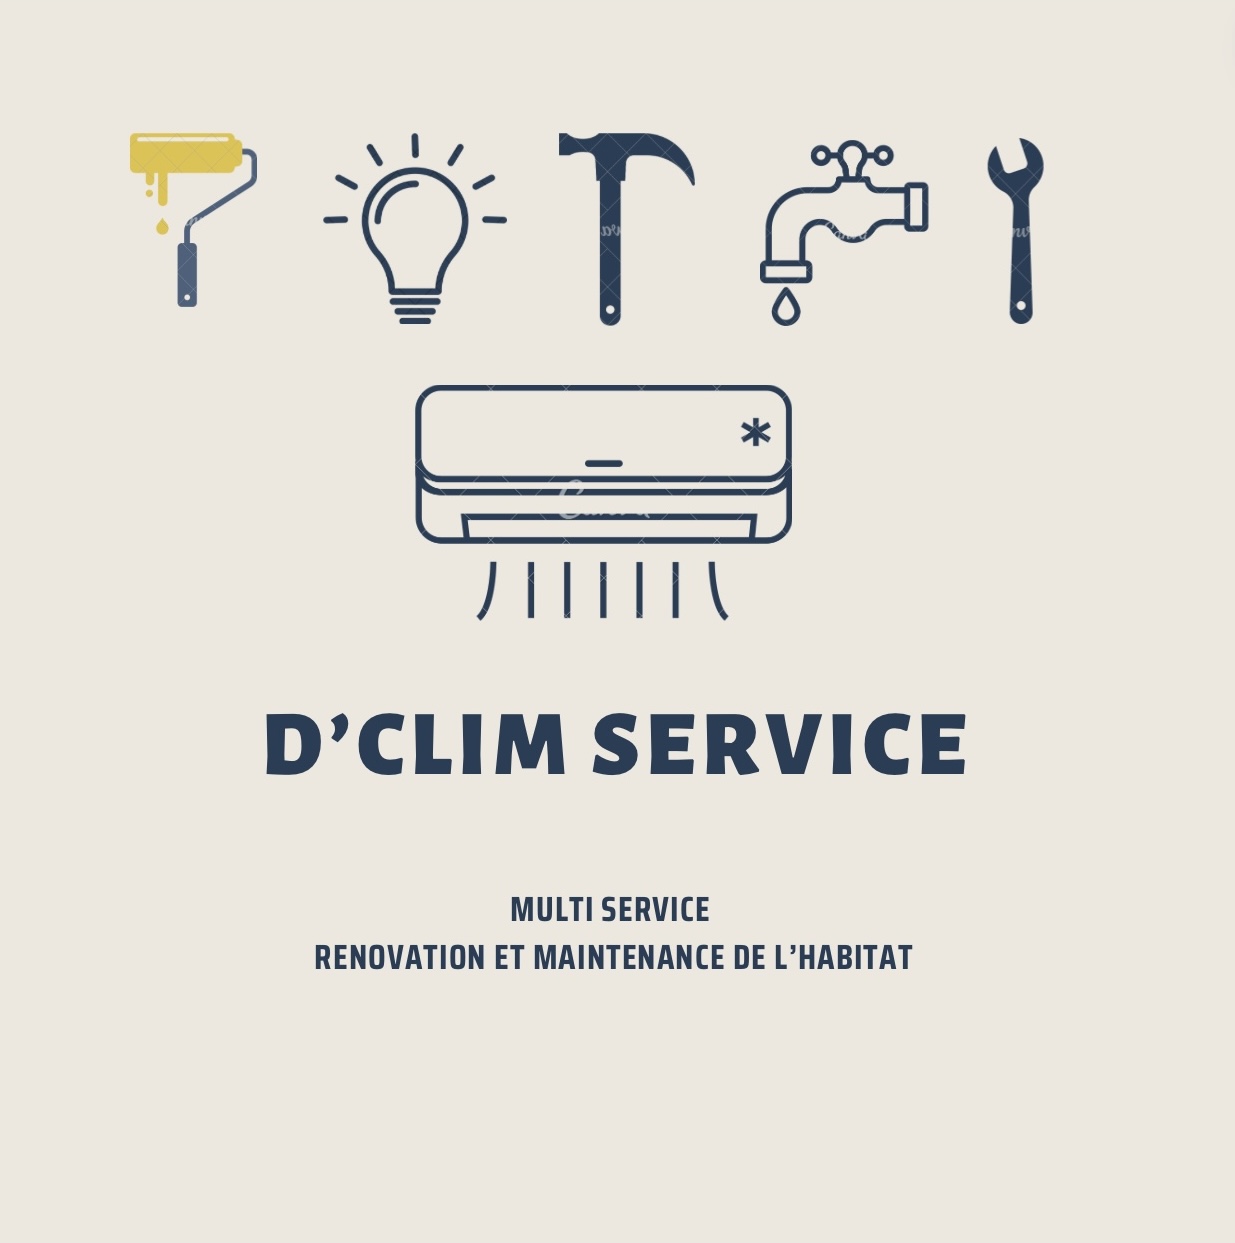 D'clim service